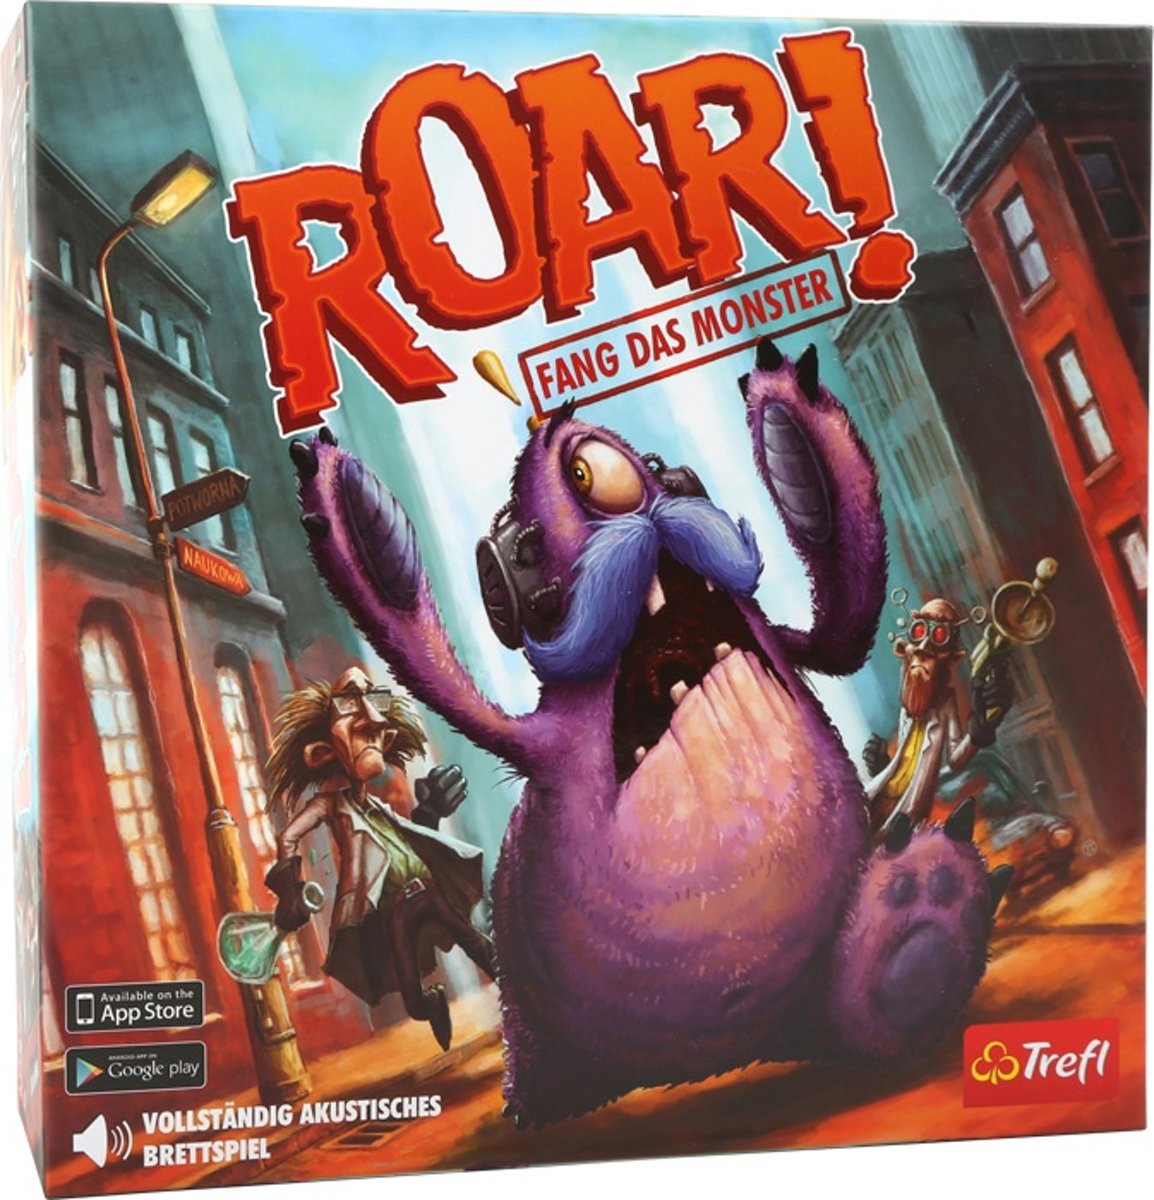 Trefl Roar! Vang Het Monster Bordspel